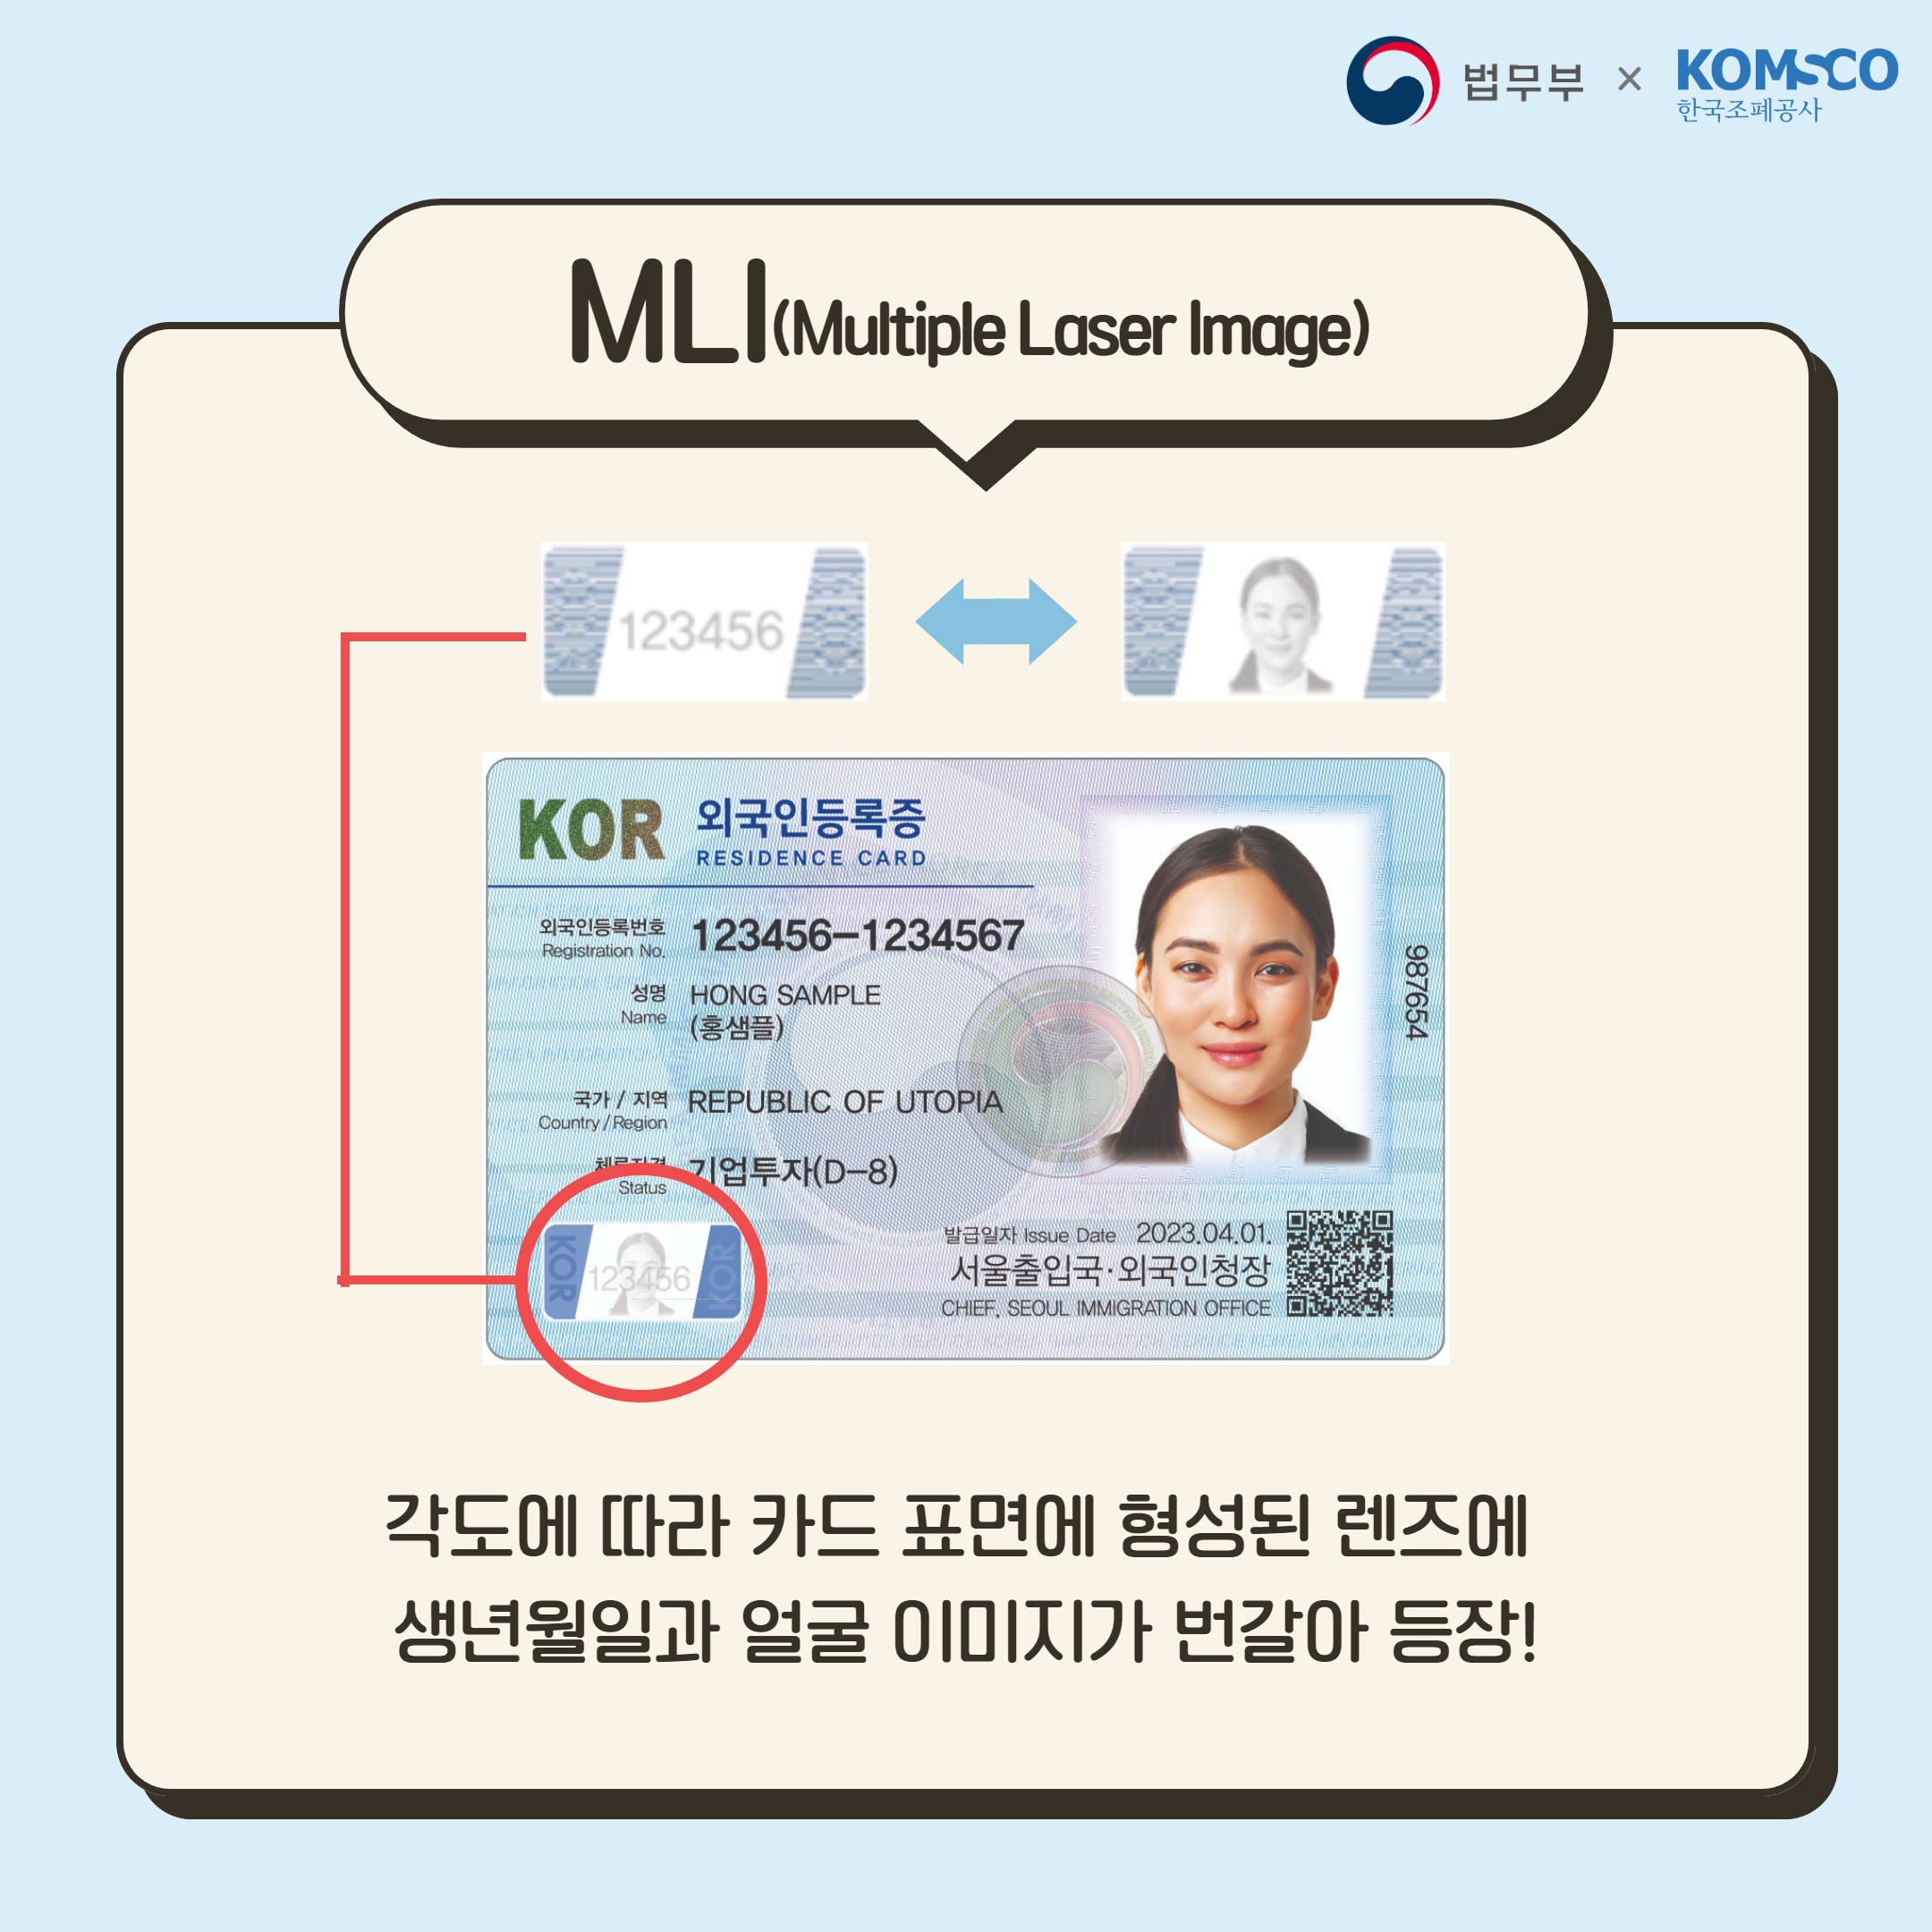 MLI(Multiple Laser Image)  각도에 따라 카드 표면에 형성된 렌즈에 생년월일과 얼굴 이미지가 번갈아 등장!